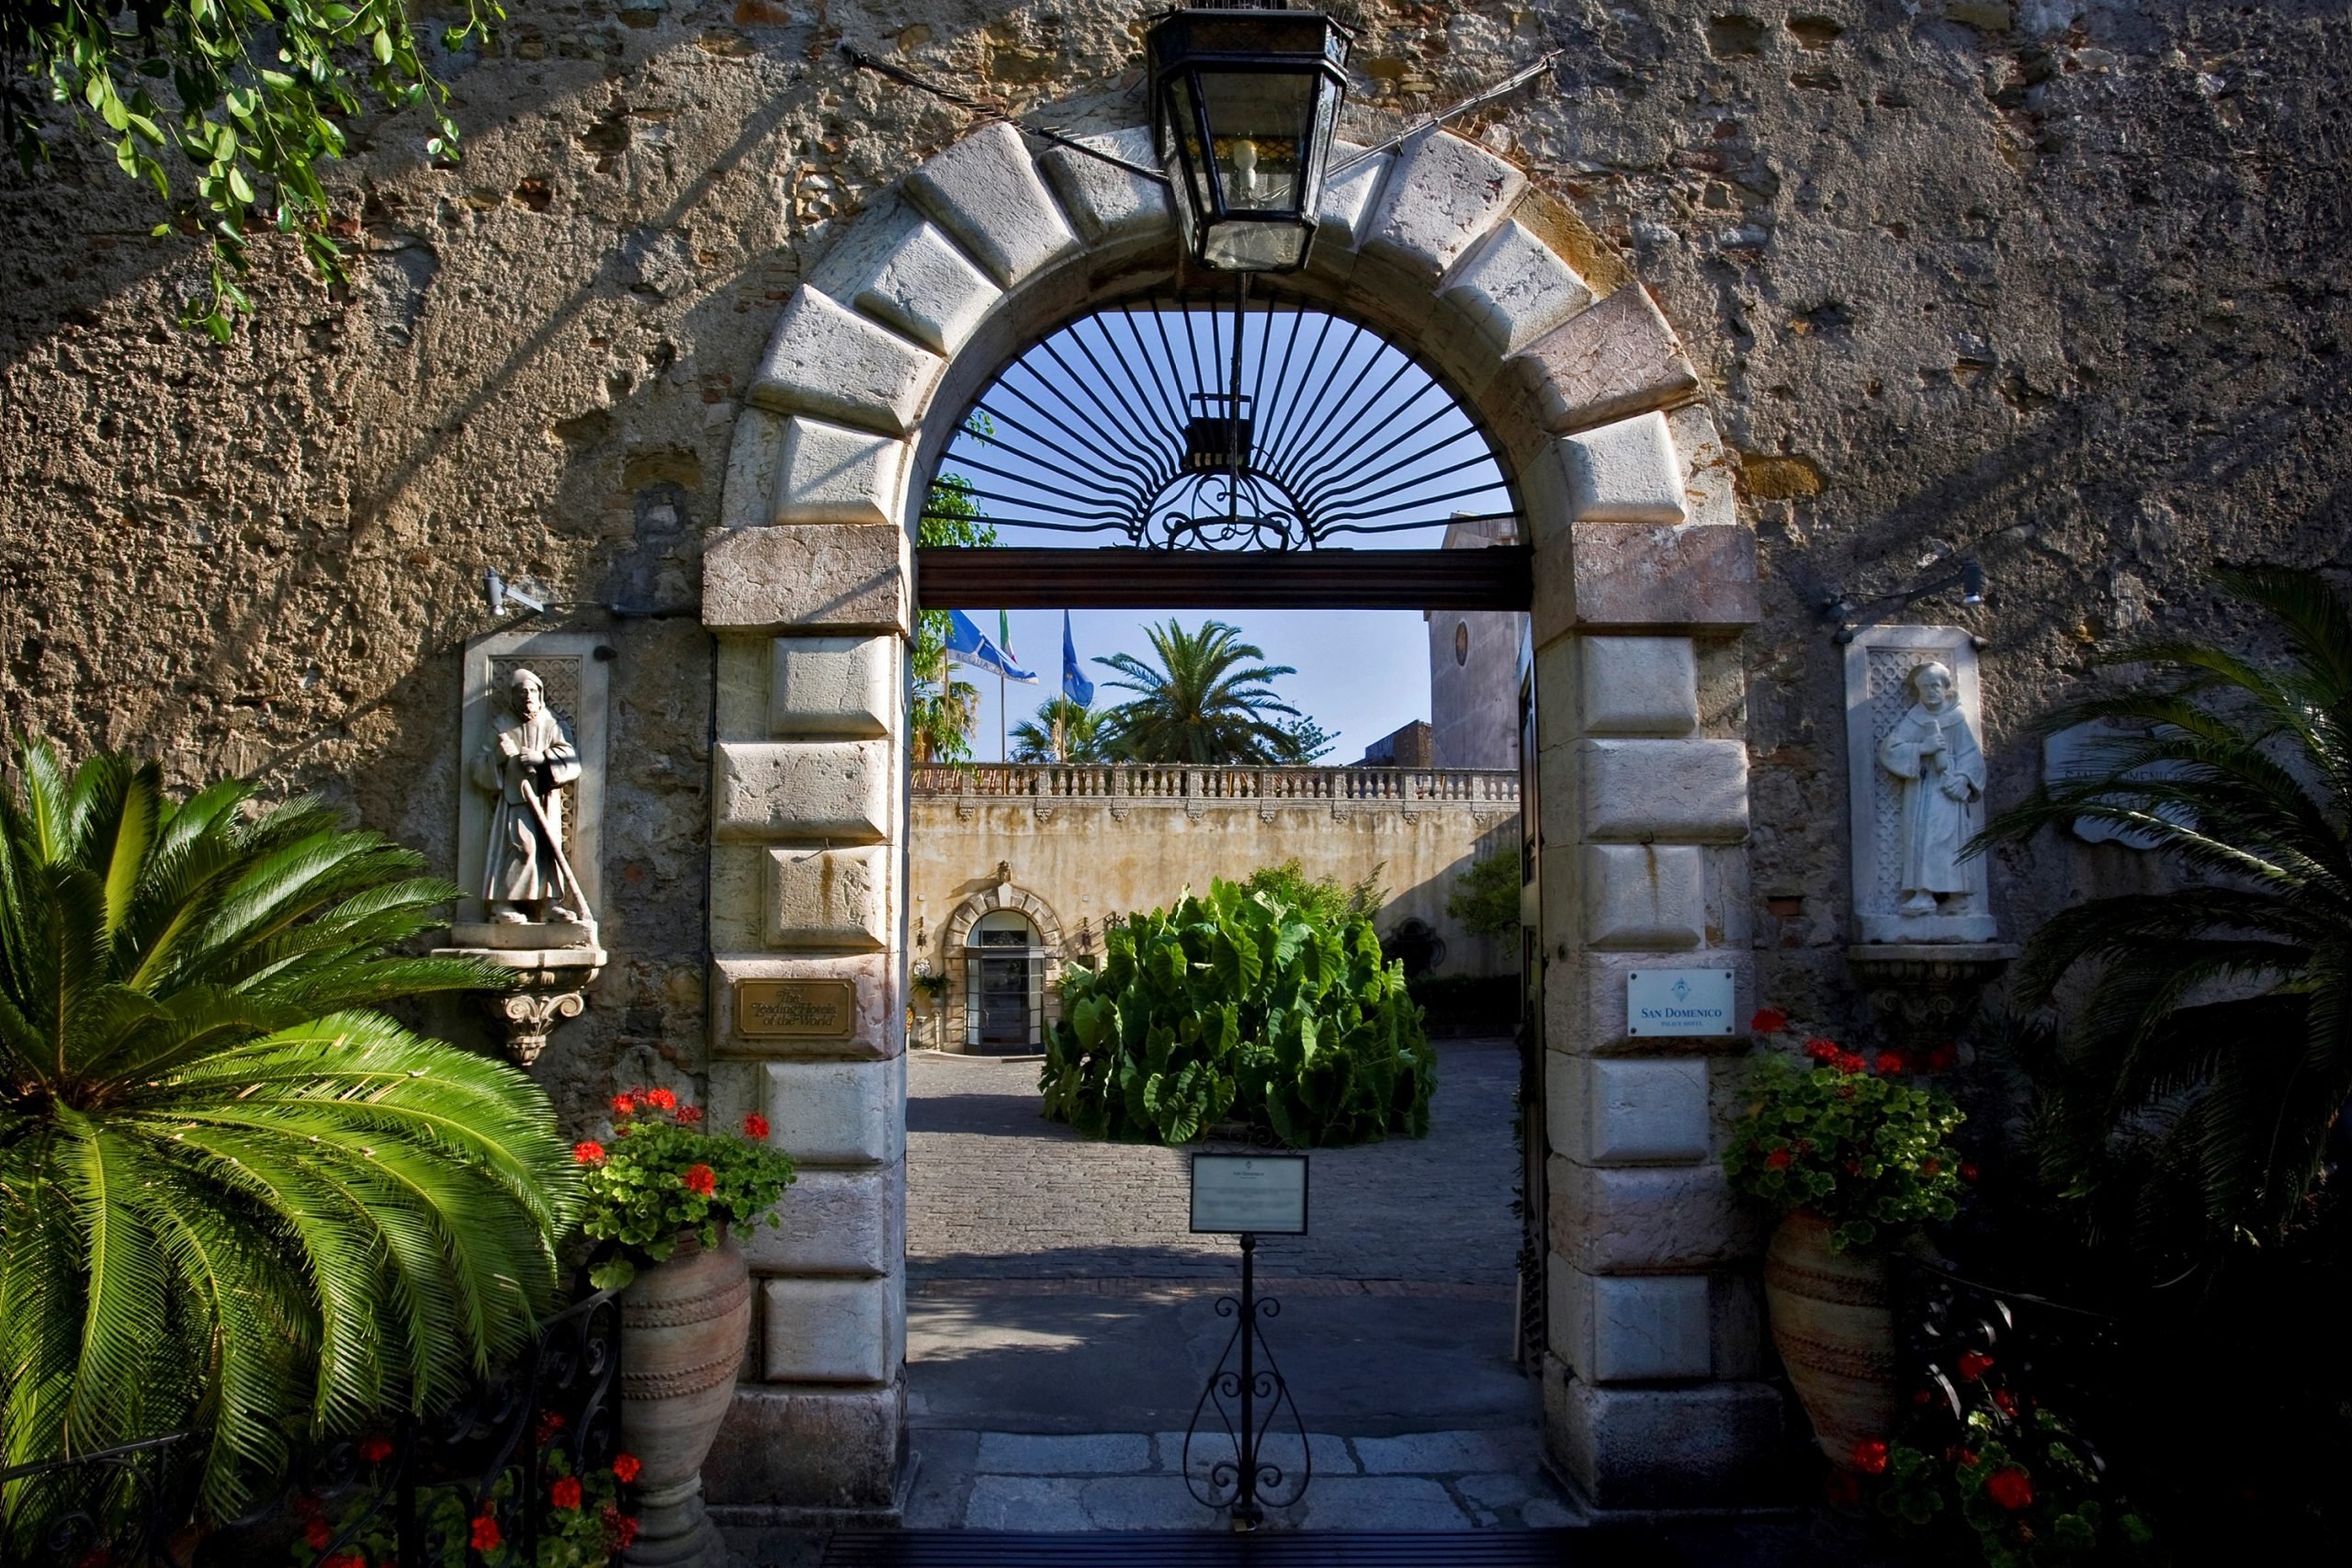 The entrance to the San Domenico Hotel in Taormina, Sicily, Italy where 'The White Lotus' Season 2 filmed